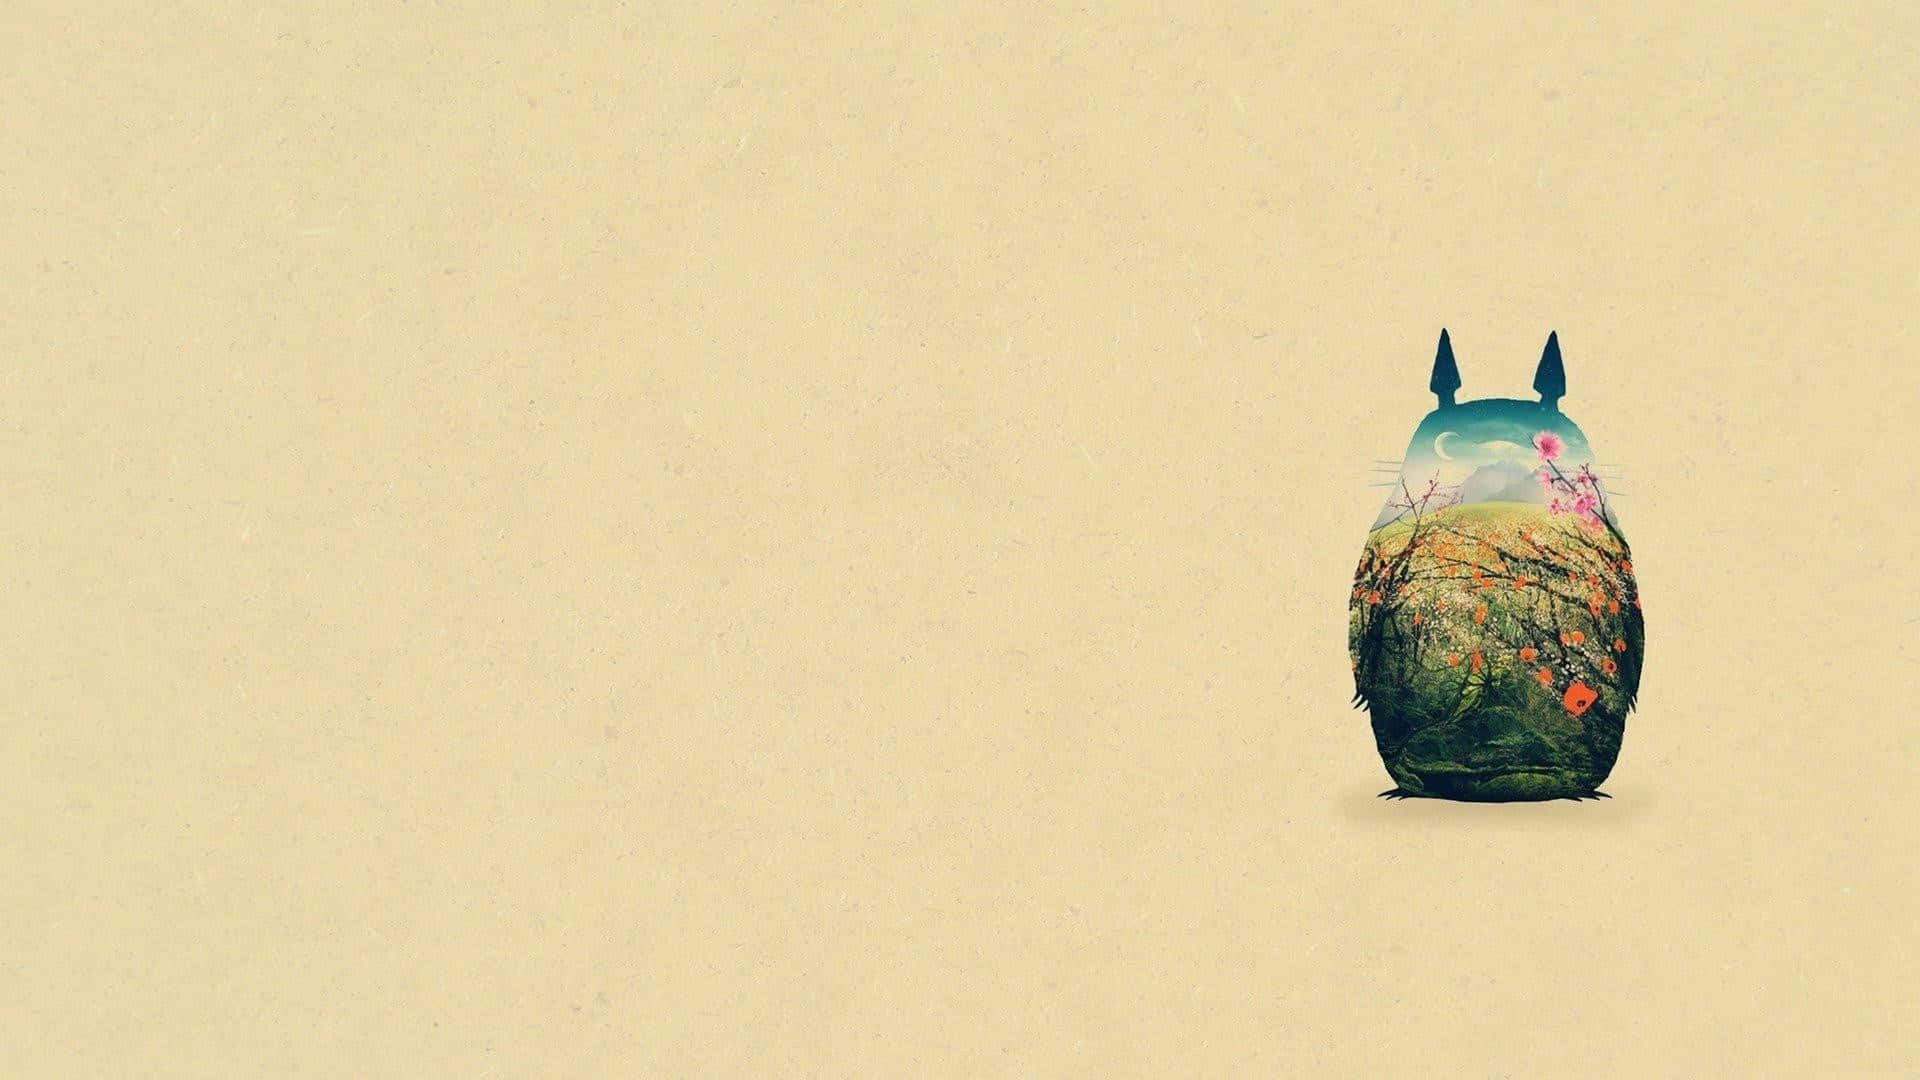 Ghibli Inspired Totoro Art Wallpaper